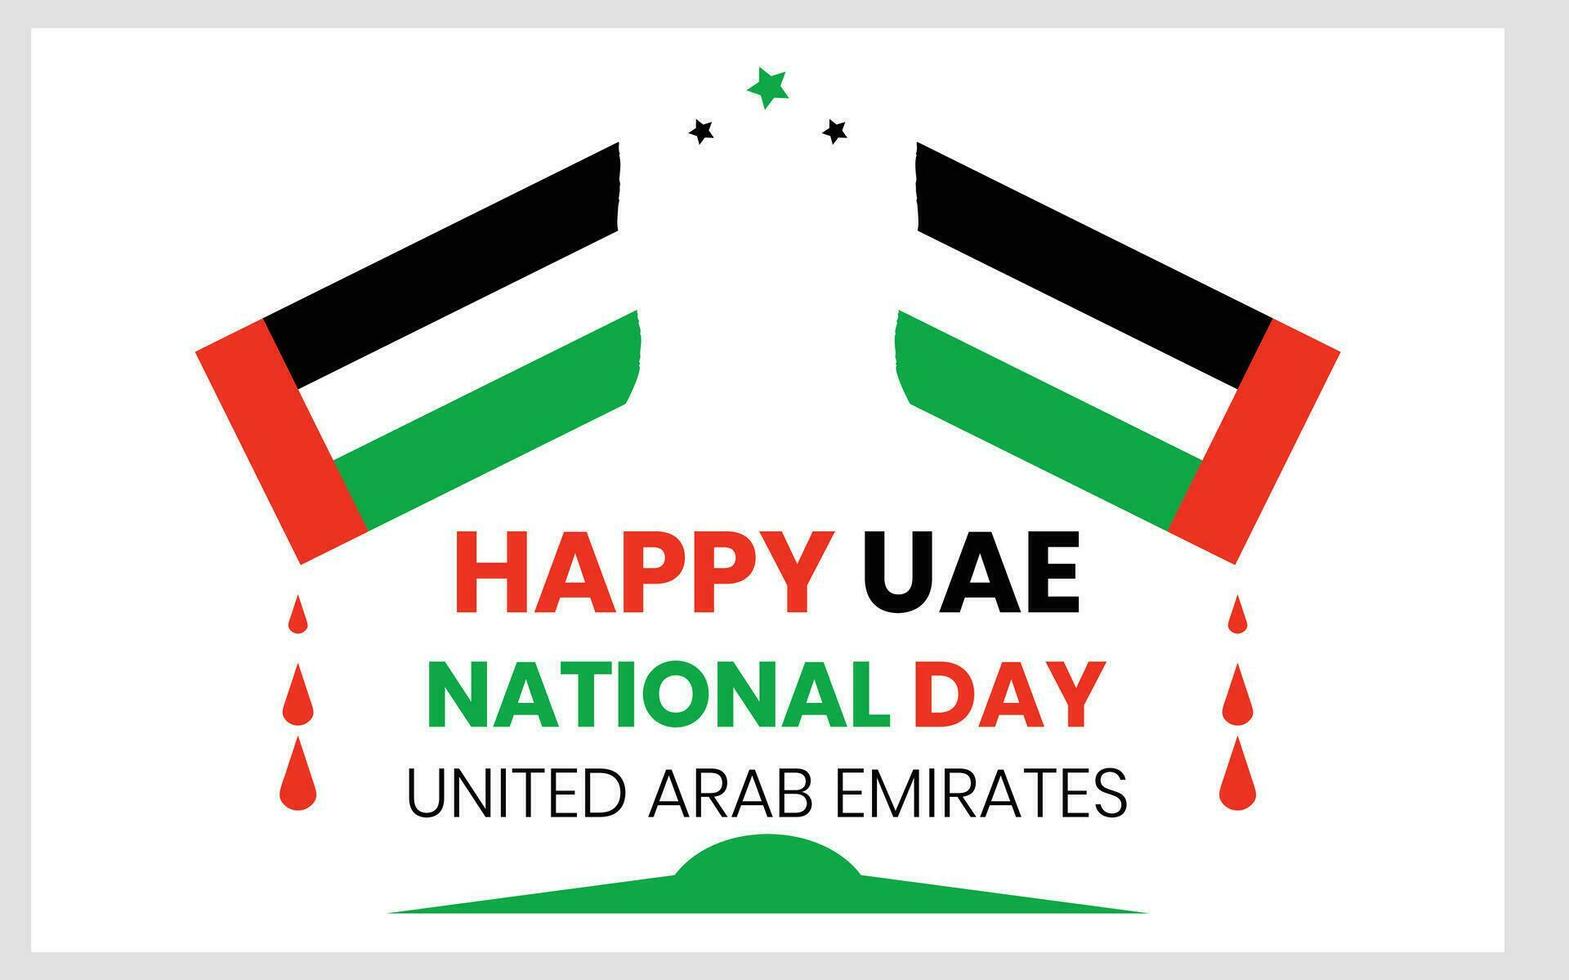 unido árabe emiratos nacional día antecedentes diseño. bandera, póster, saludo tarjeta. vector ilustración.